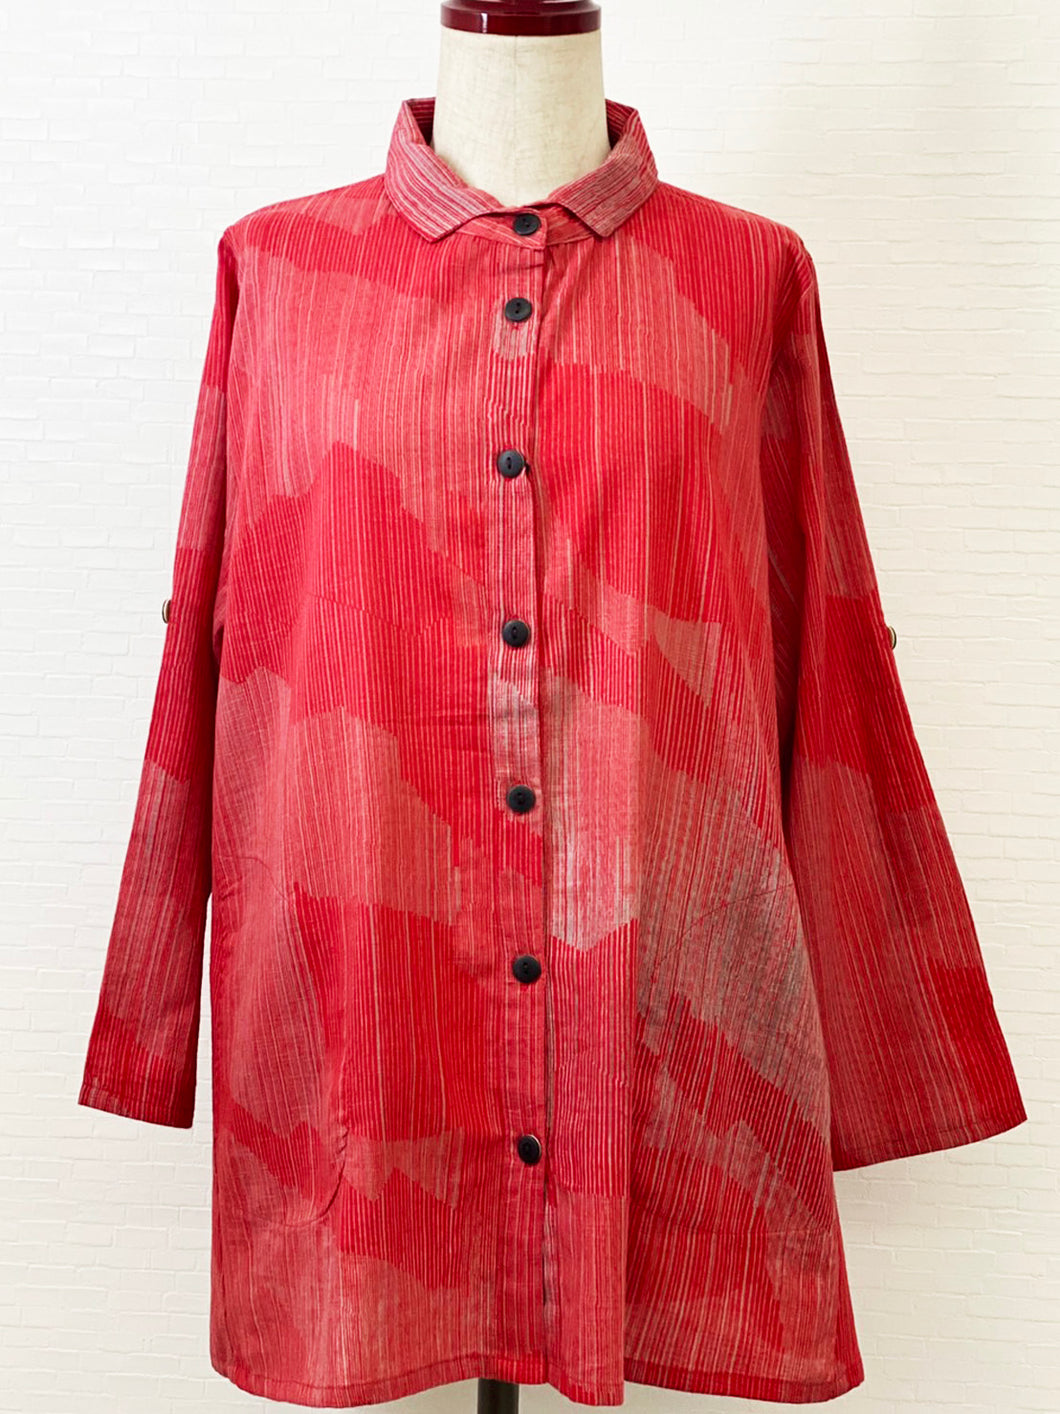 Simple Jacket - Stripe Textile Print - Red